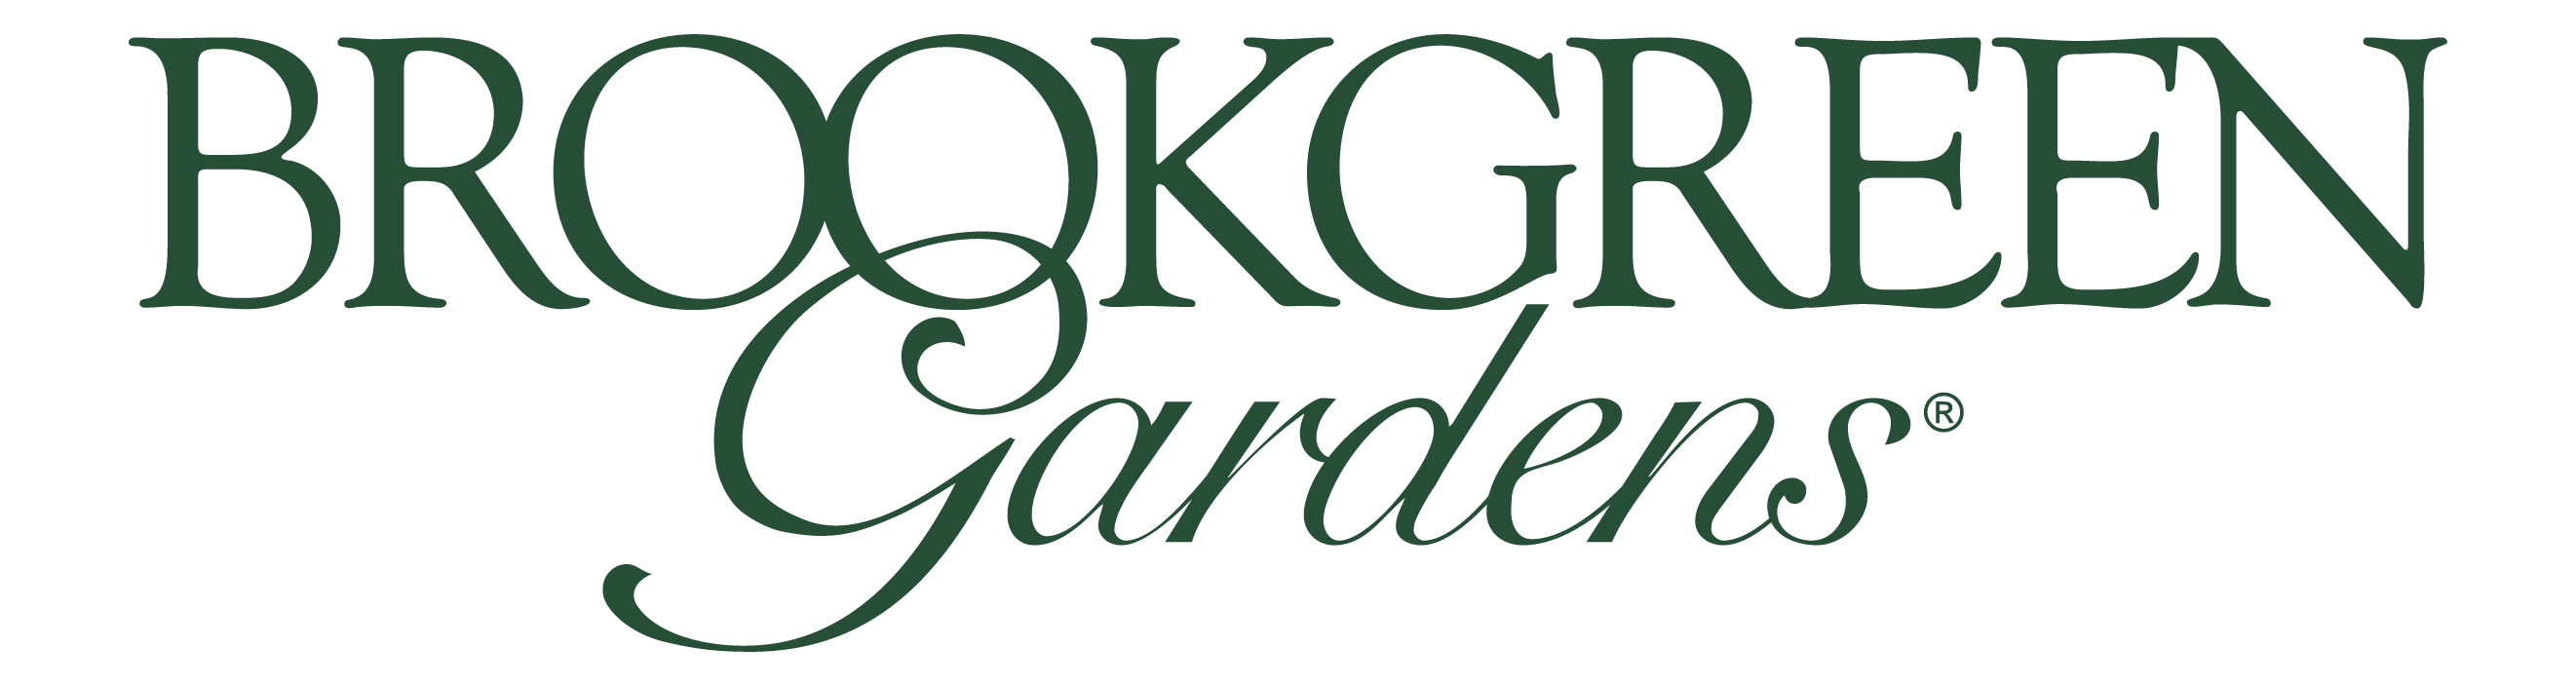 Brookgreen Gardens logo